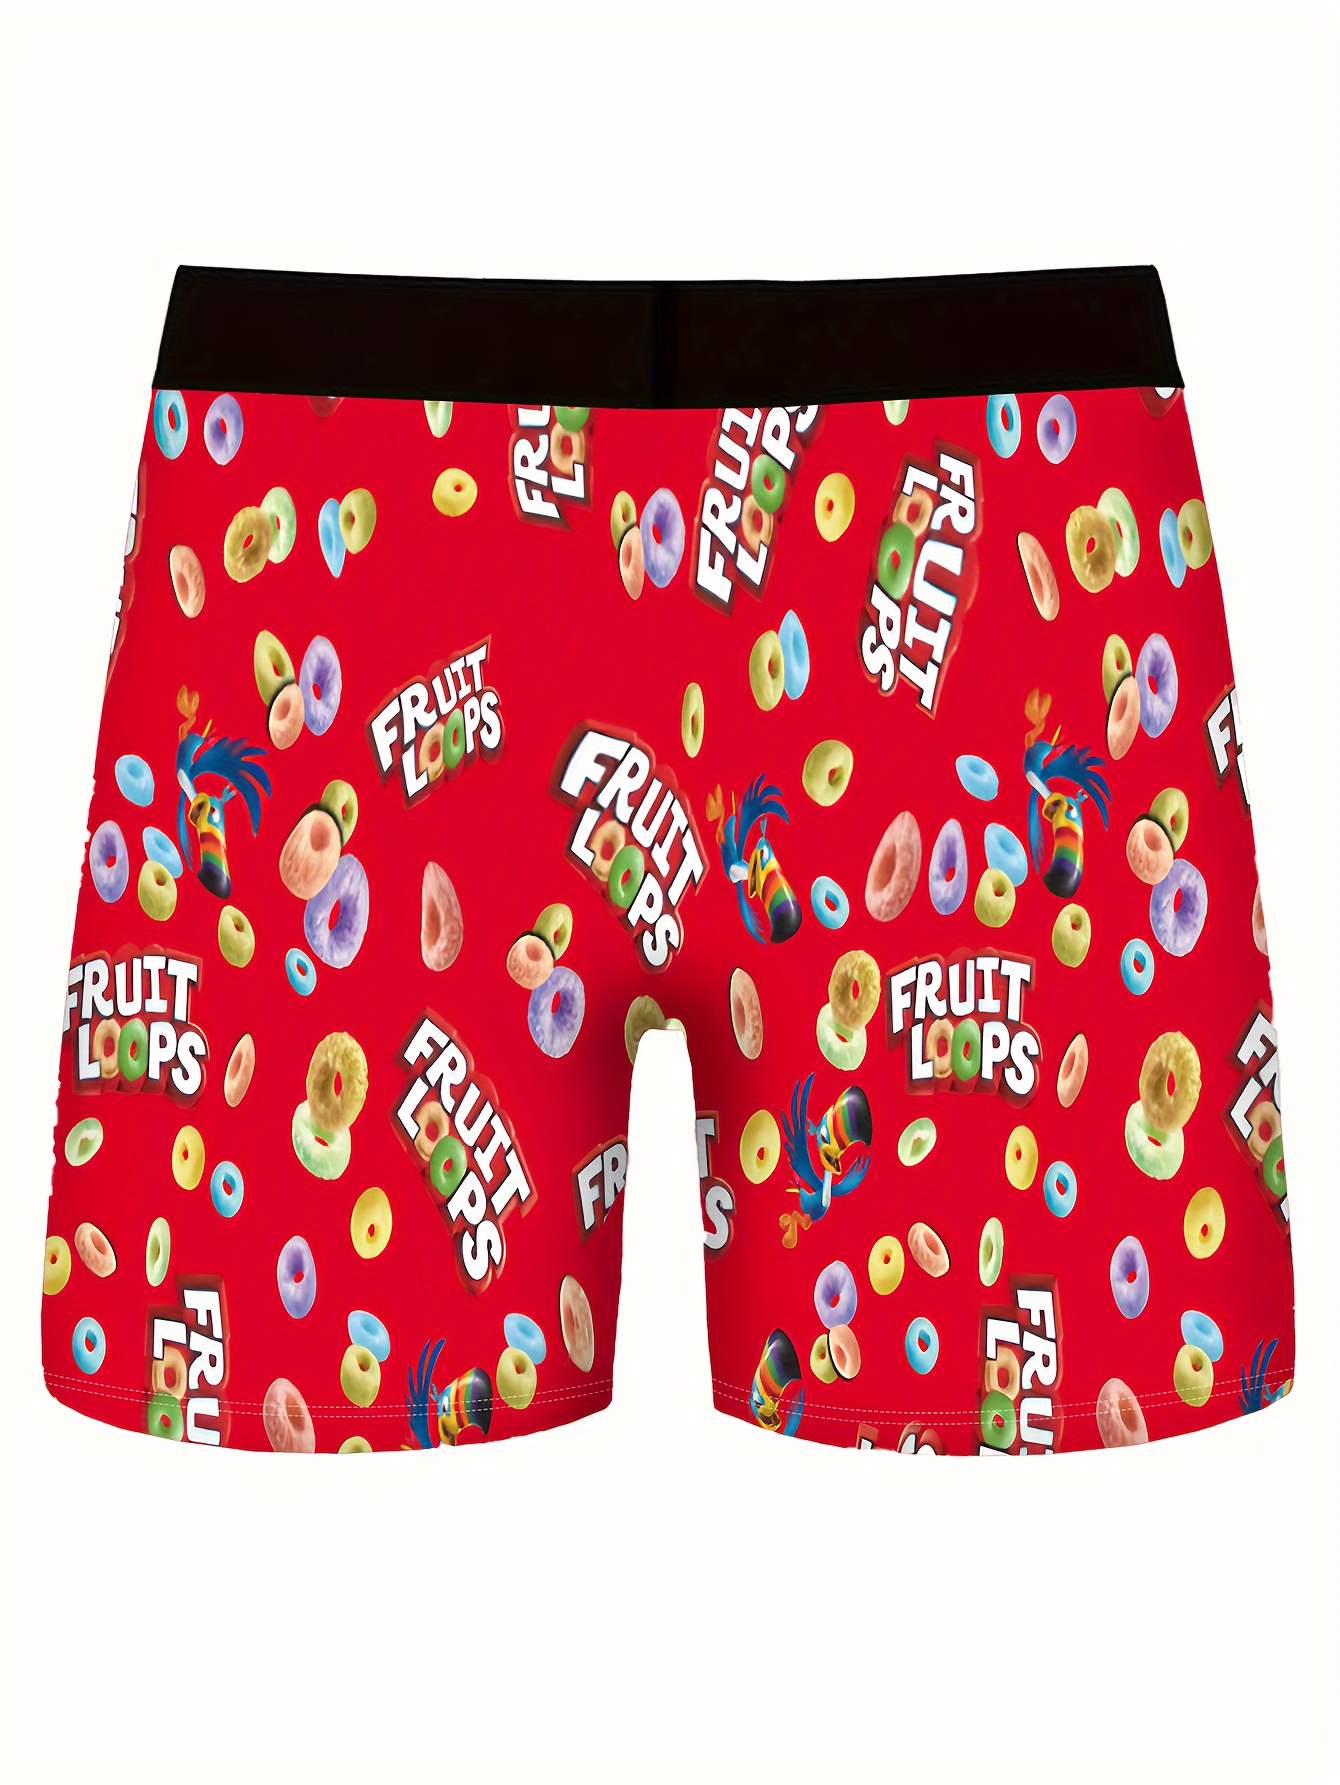 1pc plus size mens food graphic boxer briefs shorts breathable soft comfy boxer trunks sports trunks mens trendy underwear details 0